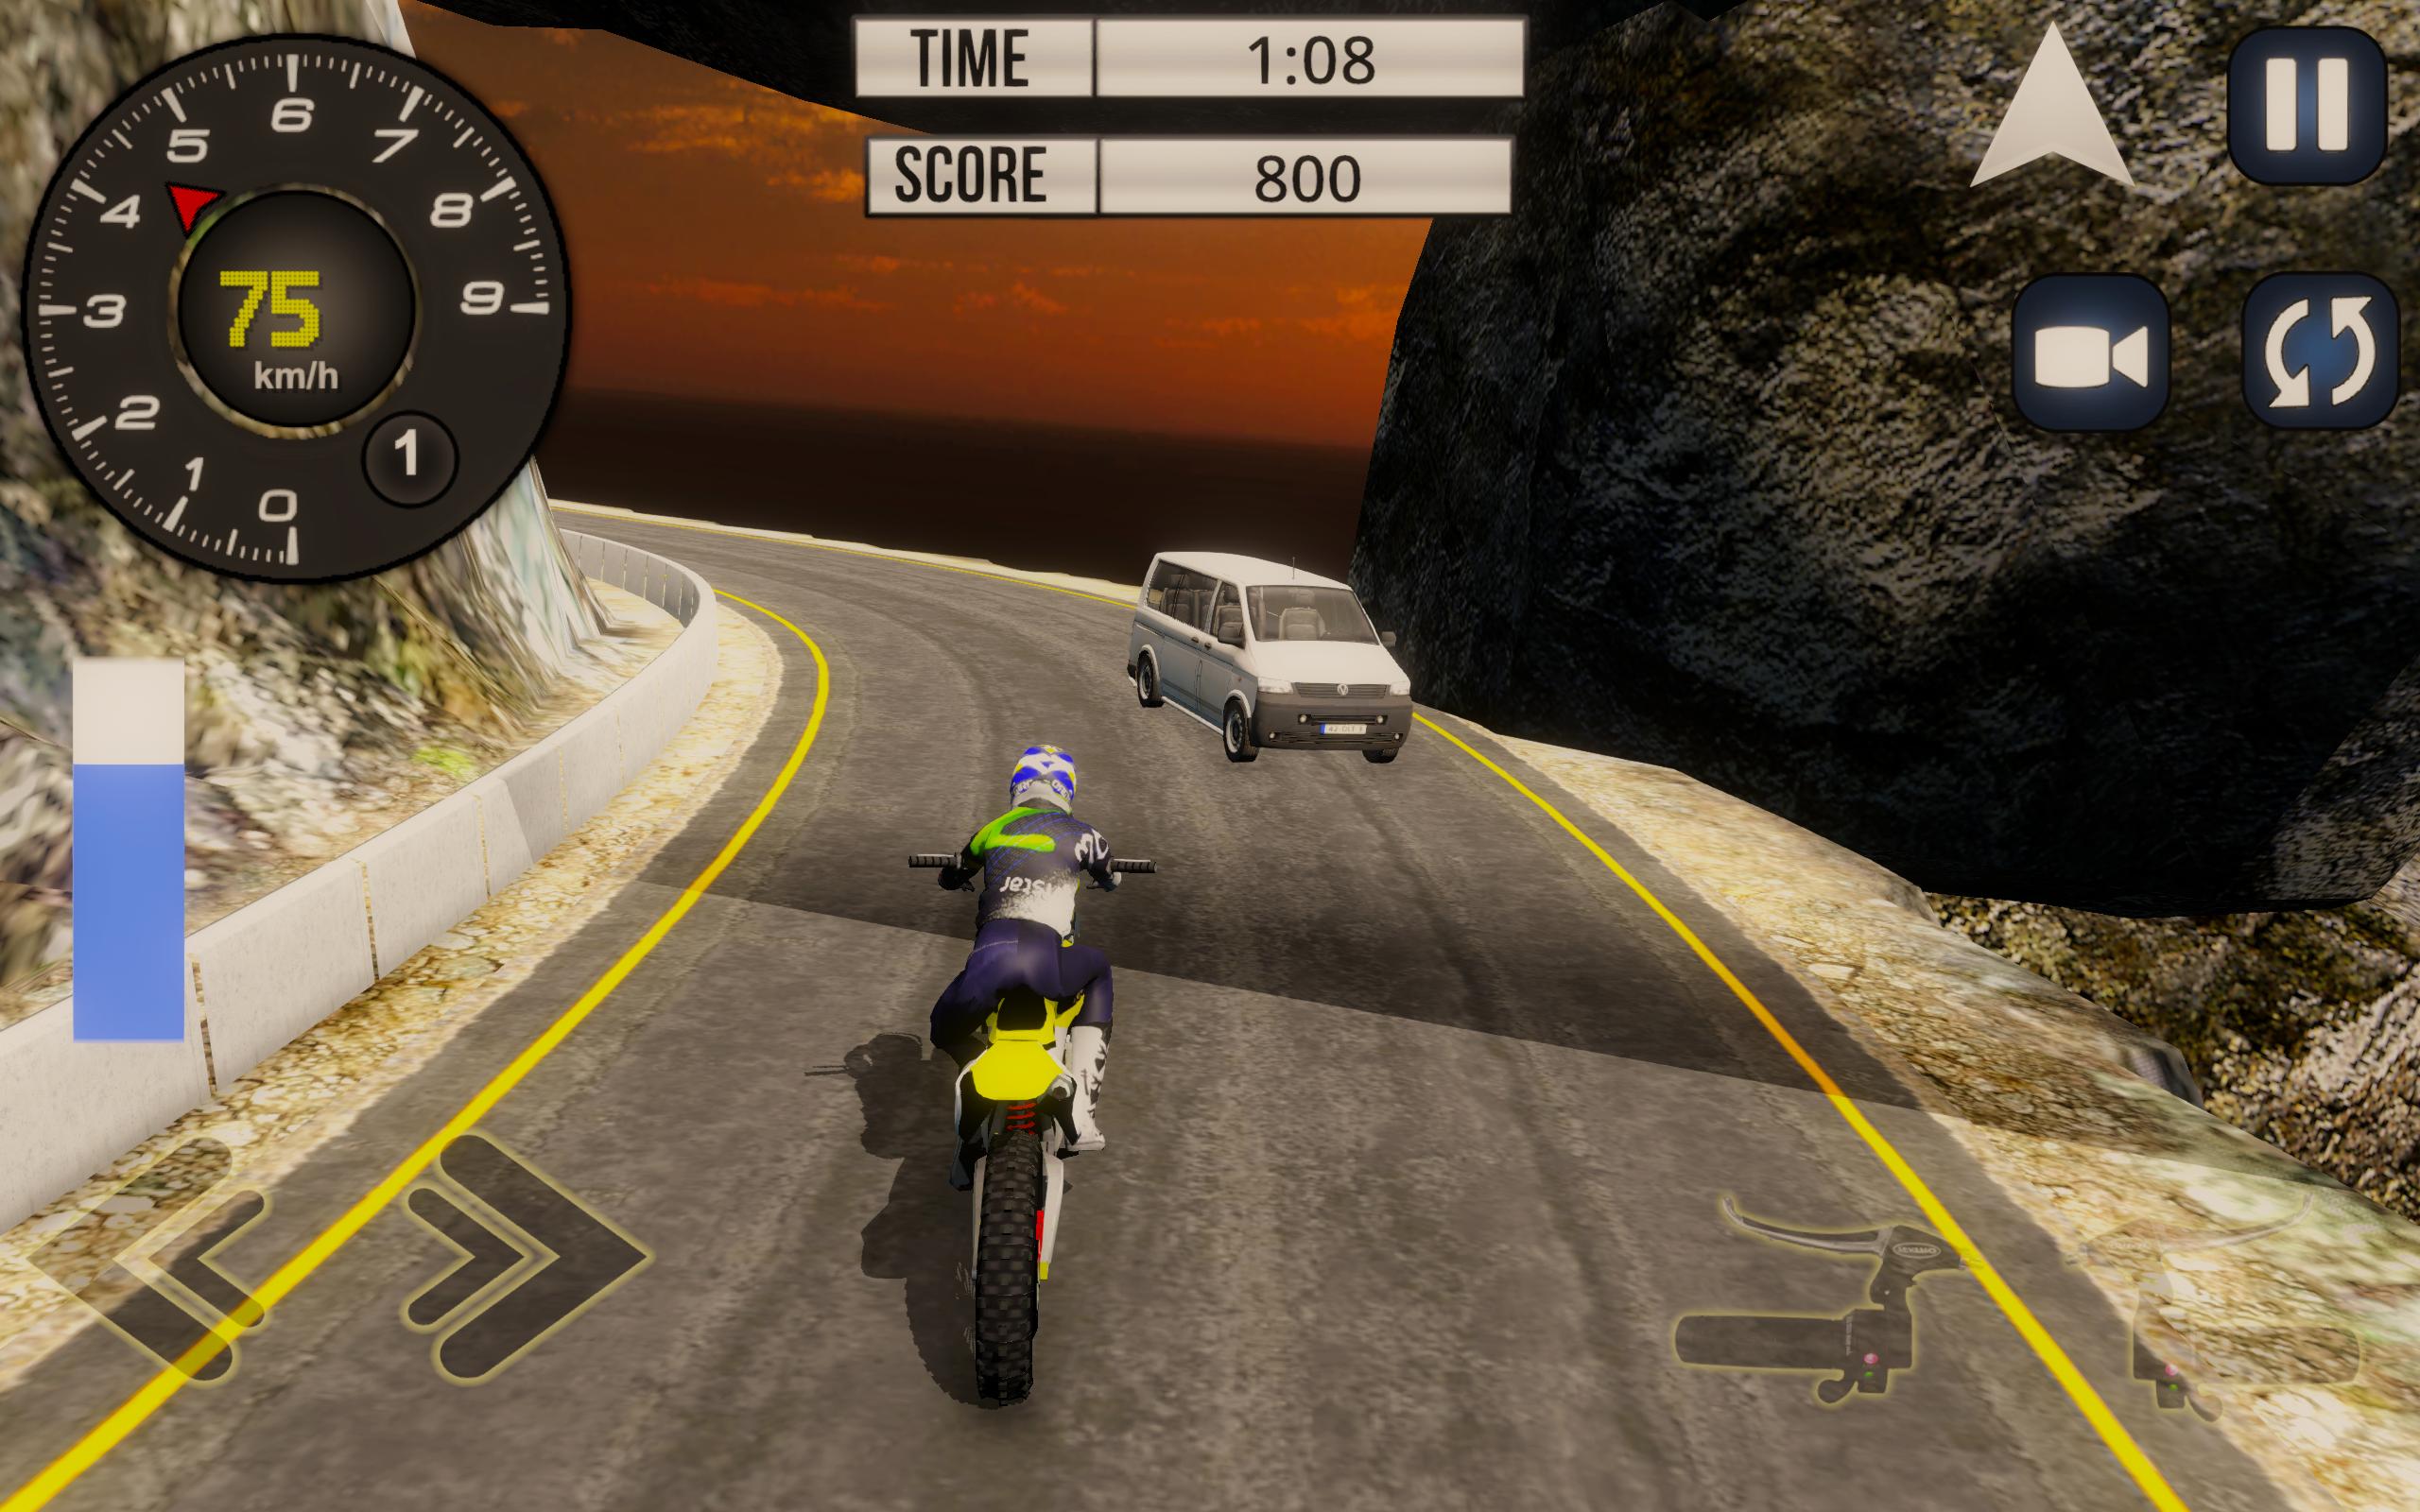 Motorcycle Racer 3D-Offroad Bike Racing Games 2018 APK for Android Download - Screen 8.jpg?fakeurl=1&type=